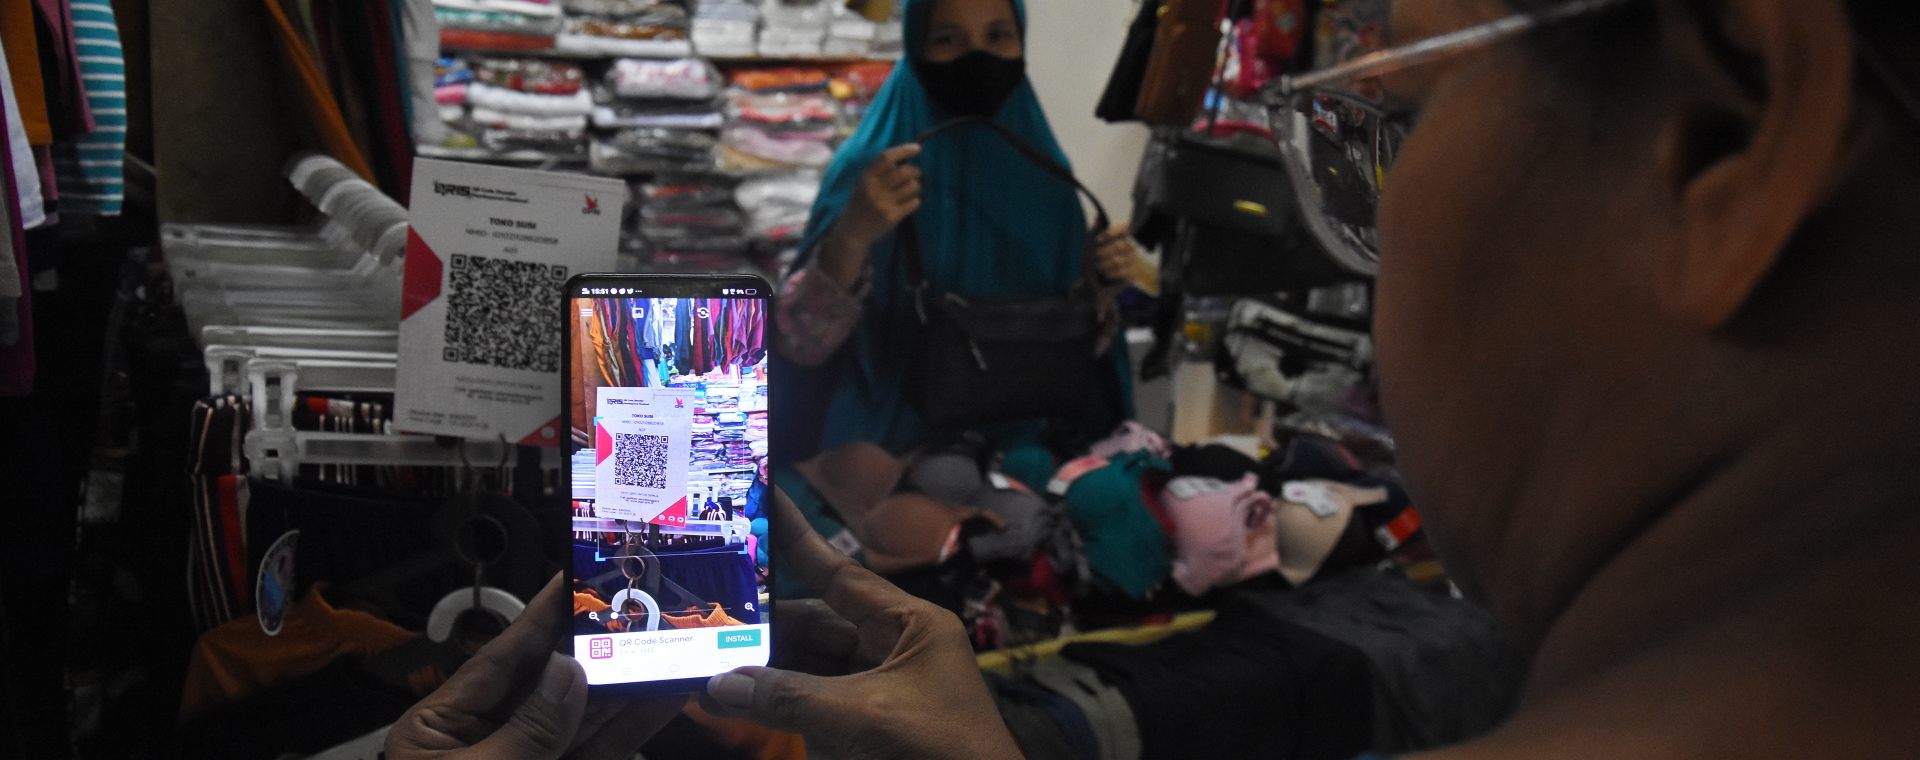 Pembeli bertransaksi nontunai melalui QRIS di Pasar Santa, Jakarta, Senin (6/12/2021).  - Antara